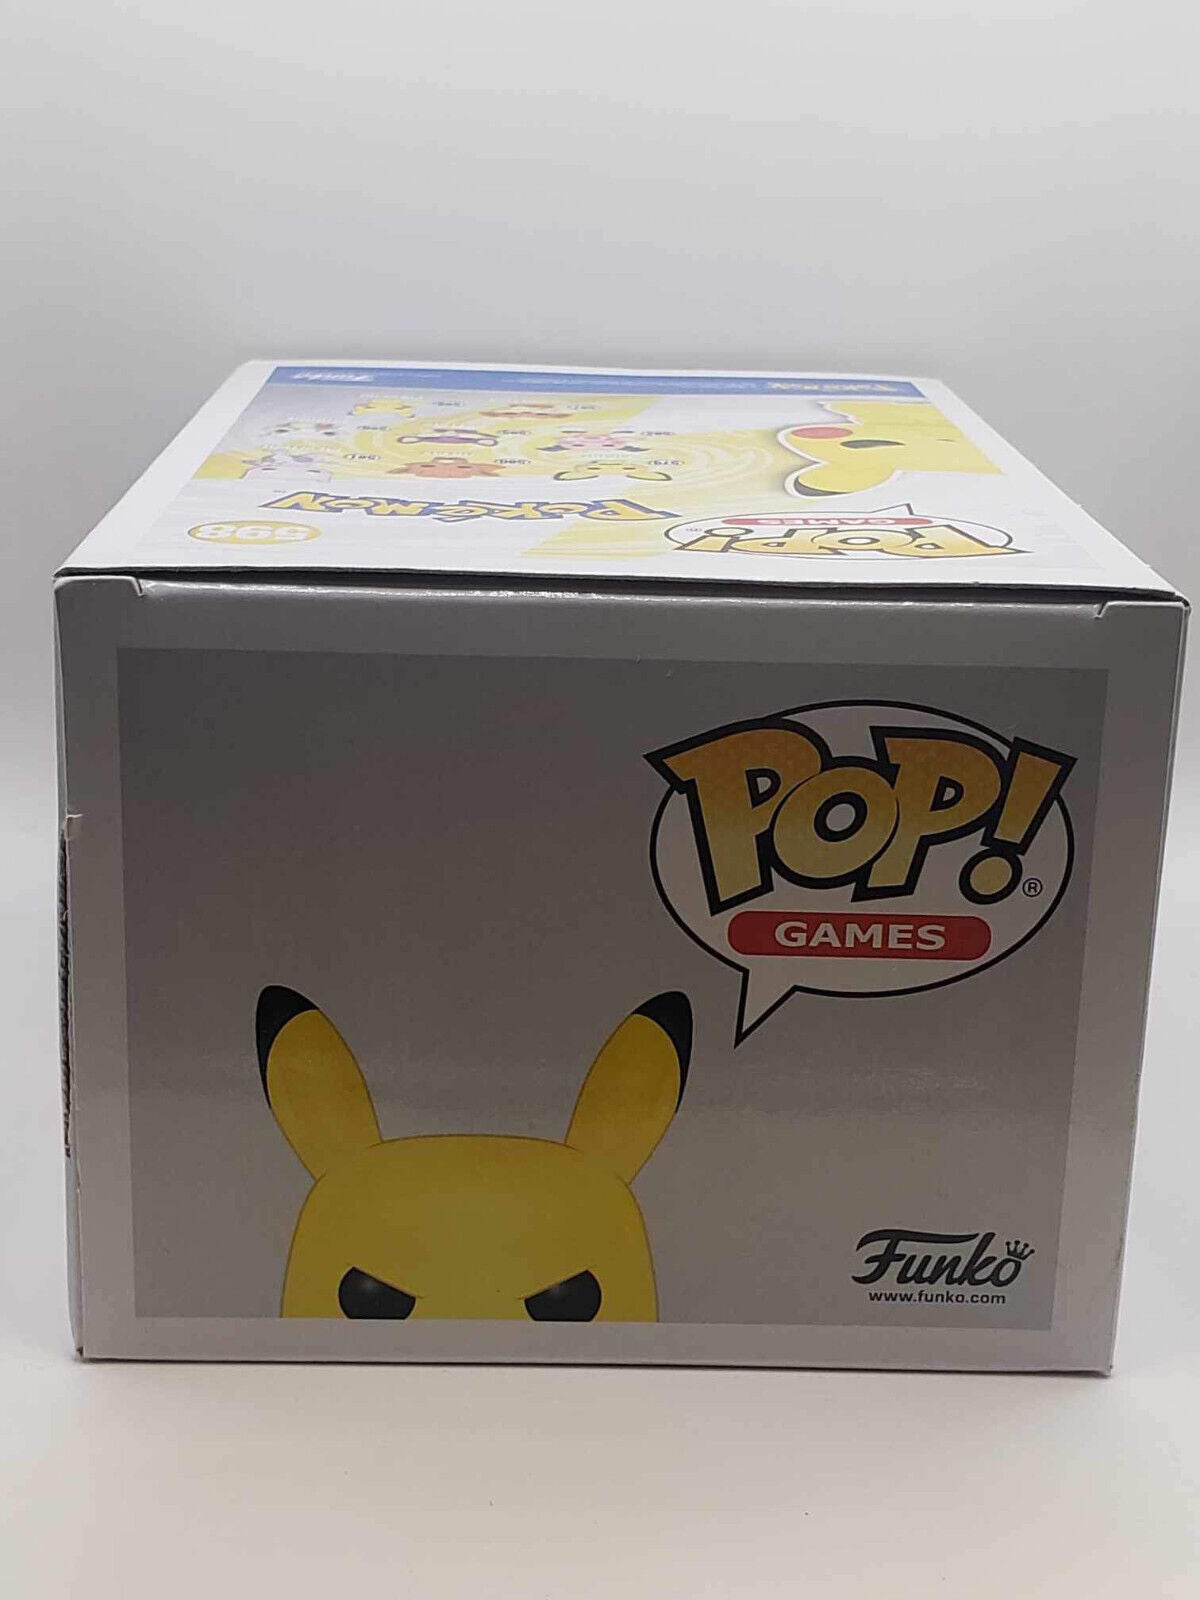 Funko Pop! Pokemon #598 Pikachu Flocked 2020 Fall Convention Limited Edition